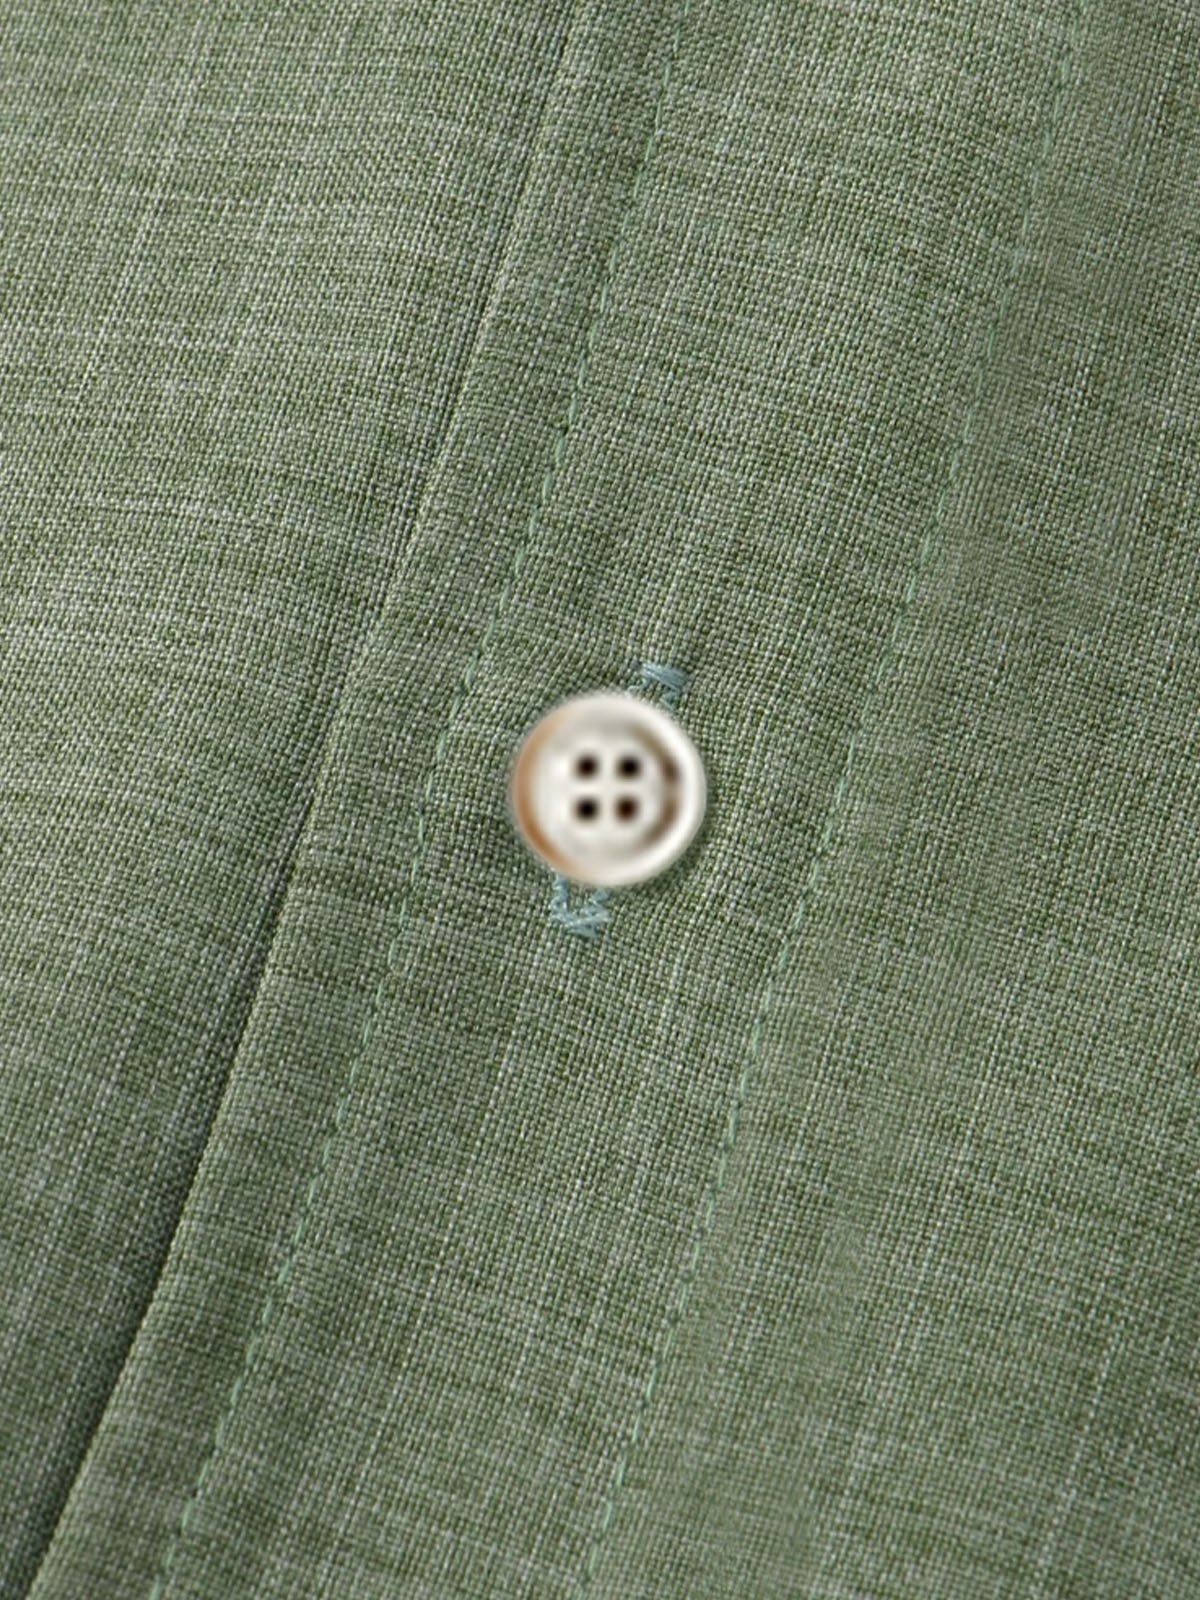 Royaura Natural Fiber Vintage Plum Blossom Men's Button Pocket Shirt